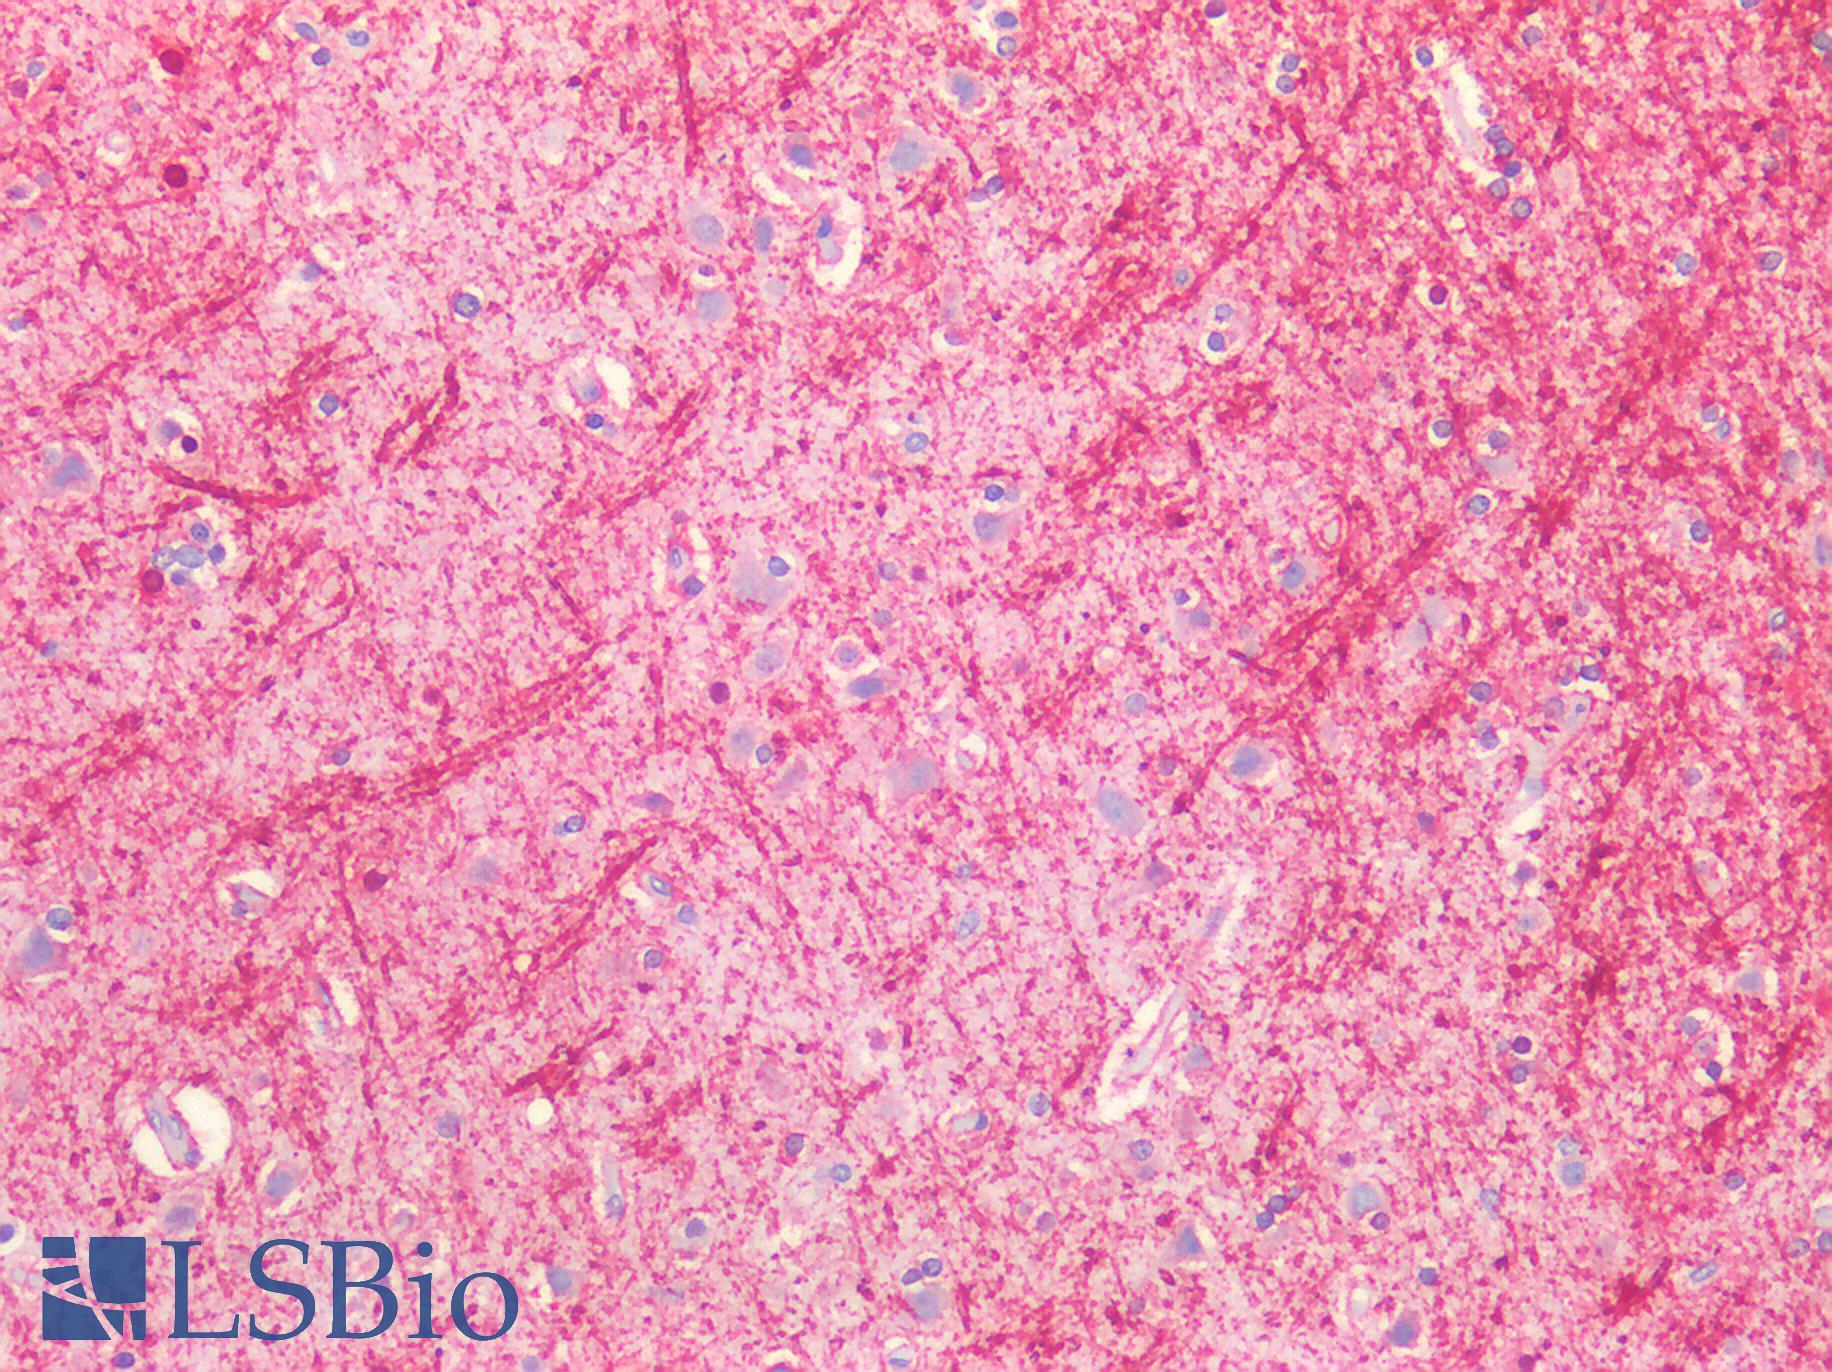 MBP / Myelin Basic Protein Antibody - Human Brain, Cortex: Formalin-Fixed, Paraffin-Embedded (FFPE)